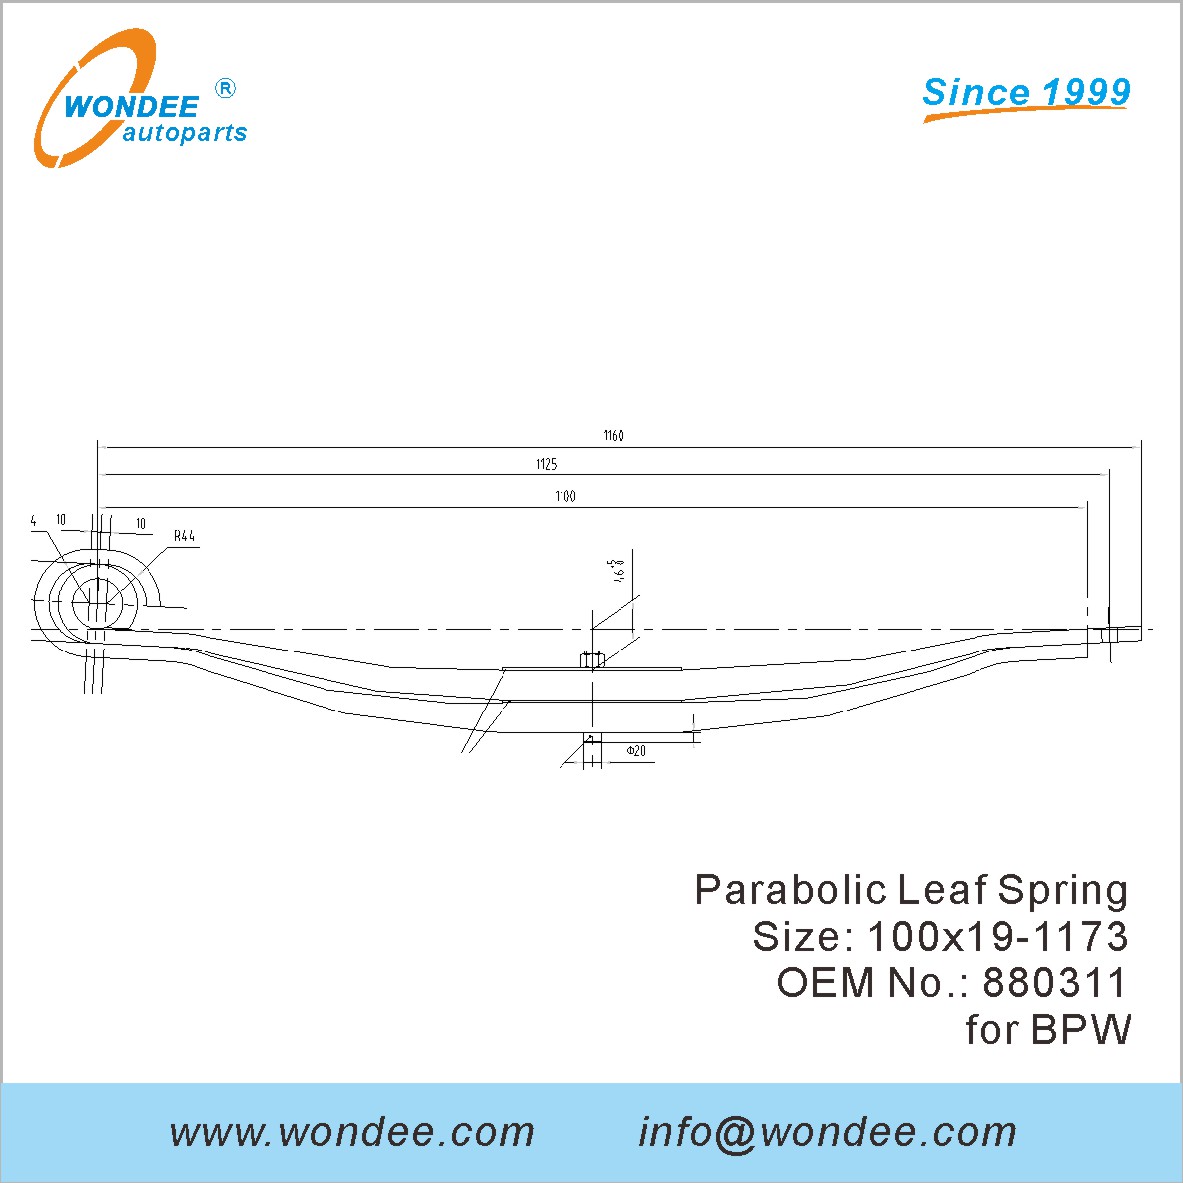 WONDEE light duty parabolic Leaf Spring OEM 880311 for BPW